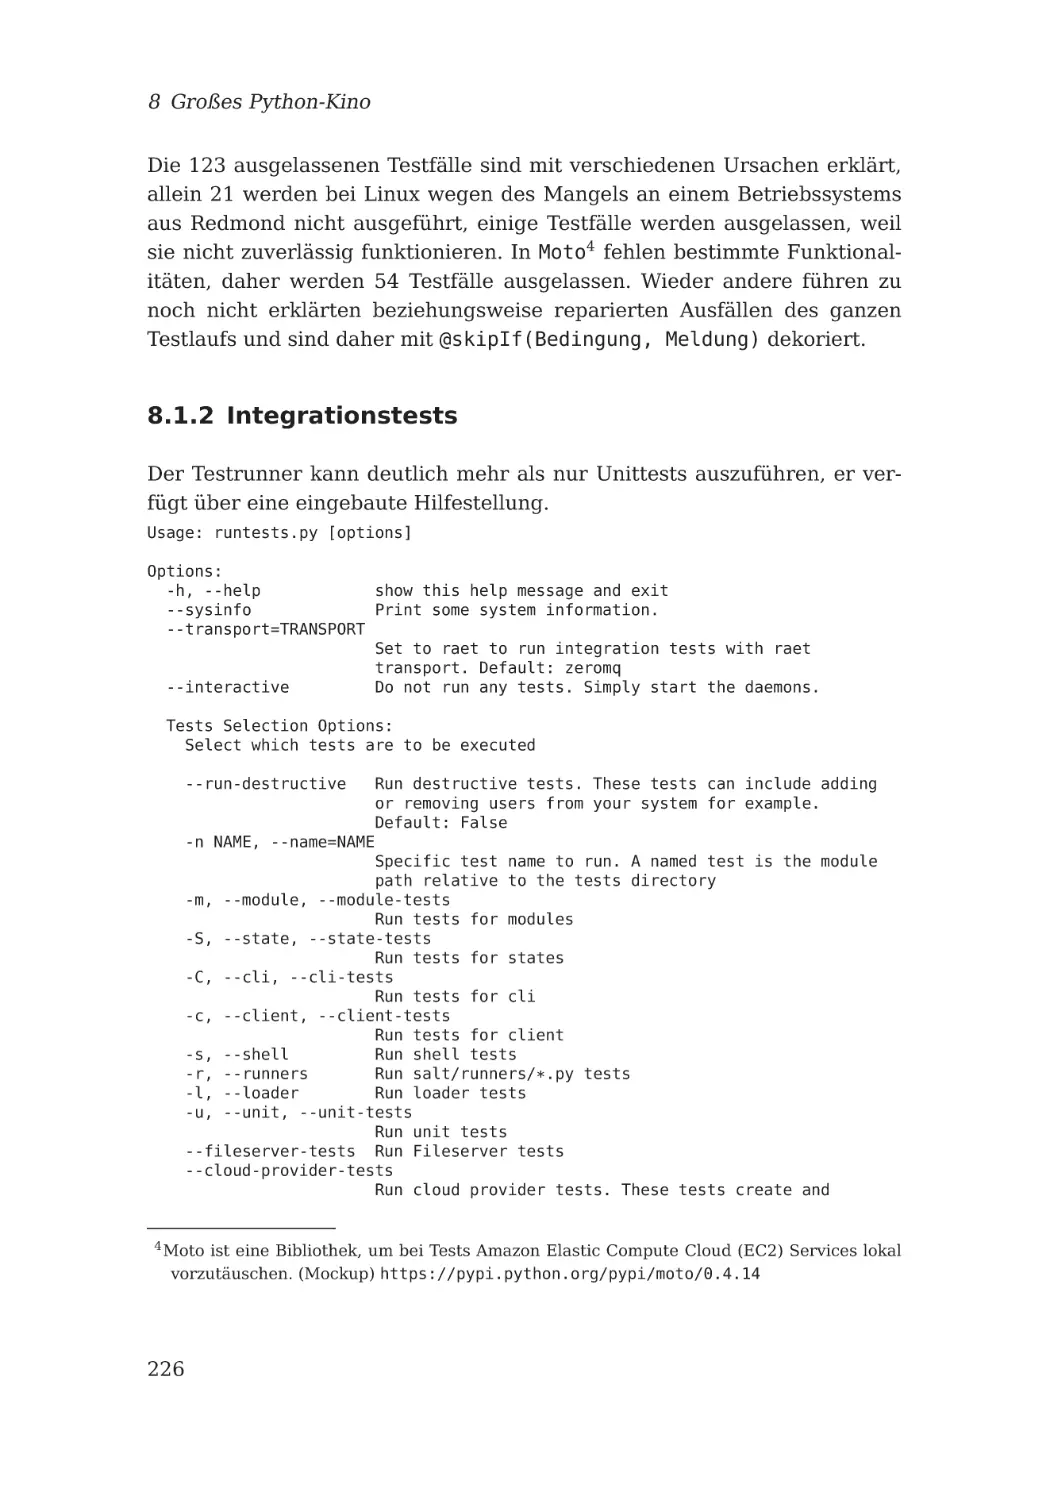 8.1.2 Integrationstests